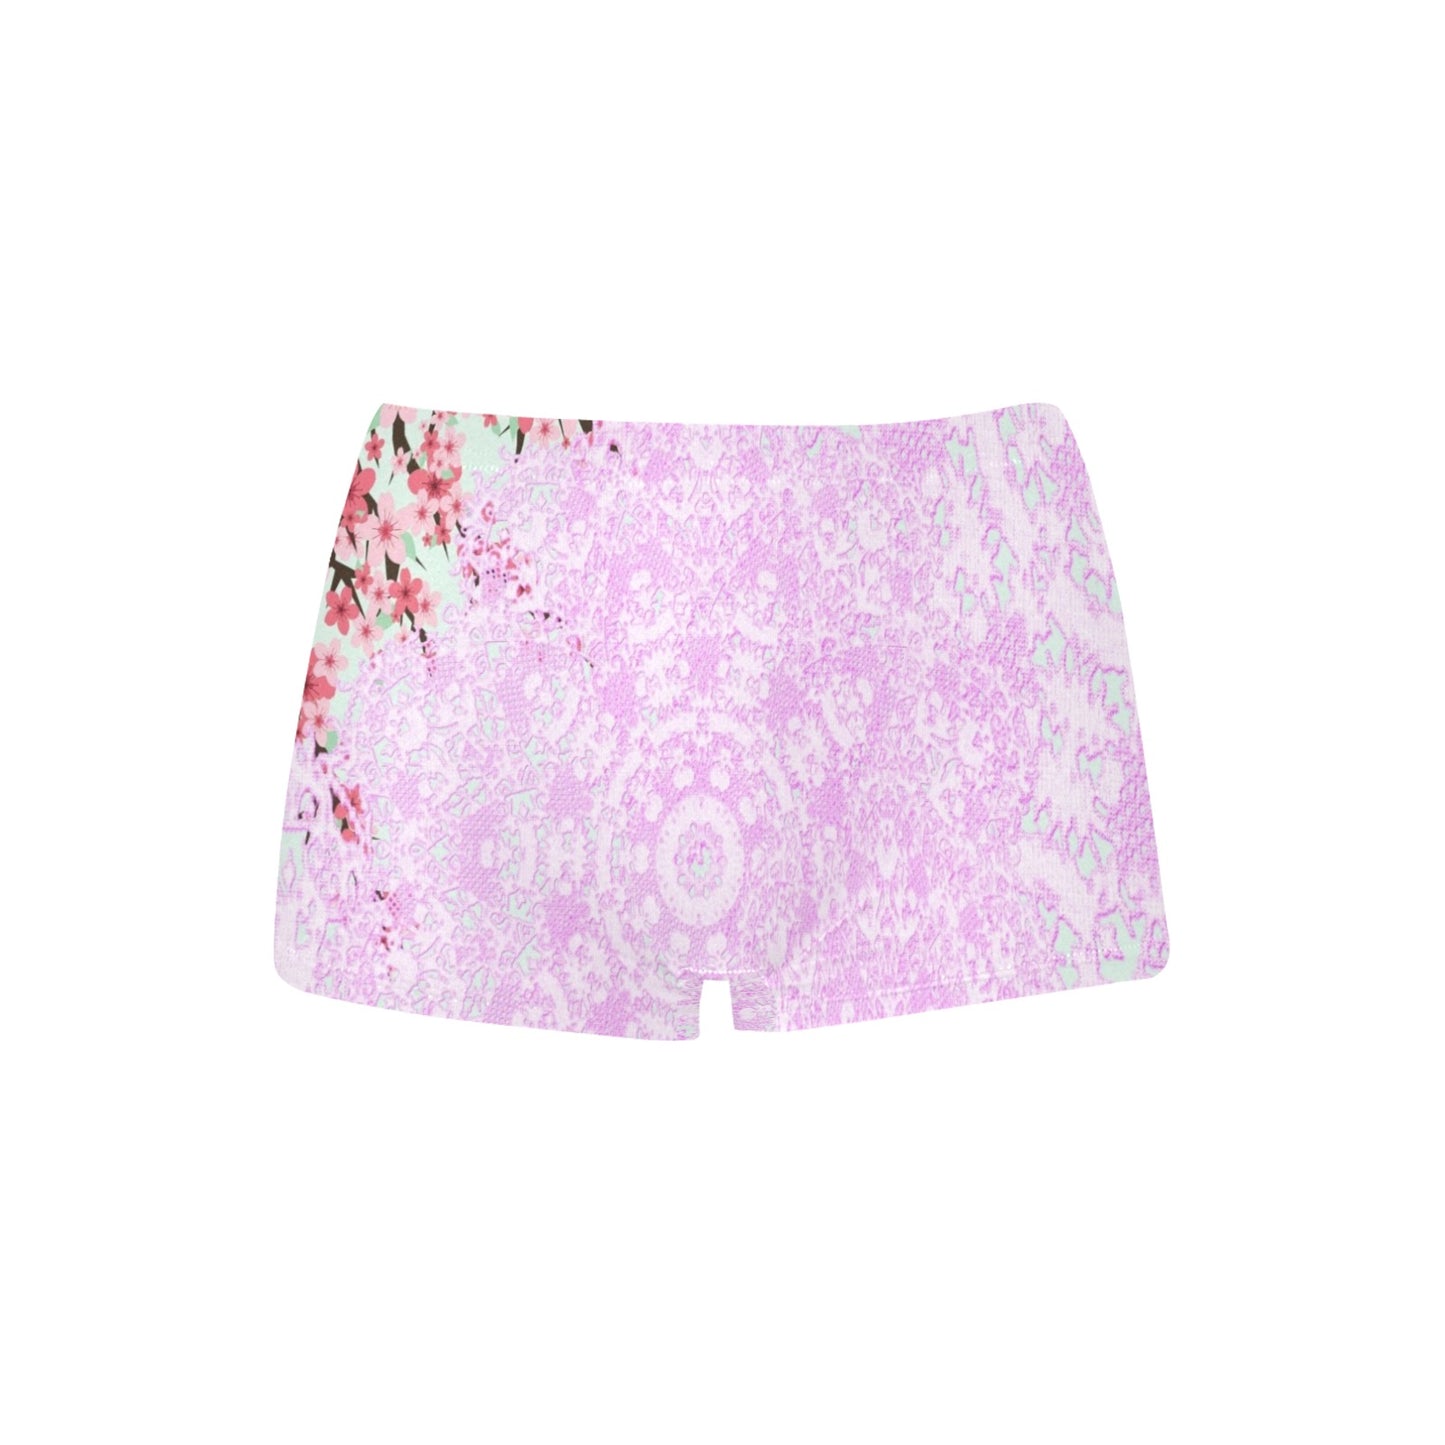 Printed Lace Boyshorts, daisy dukes, pum pum shorts, shortie shorts , design 09